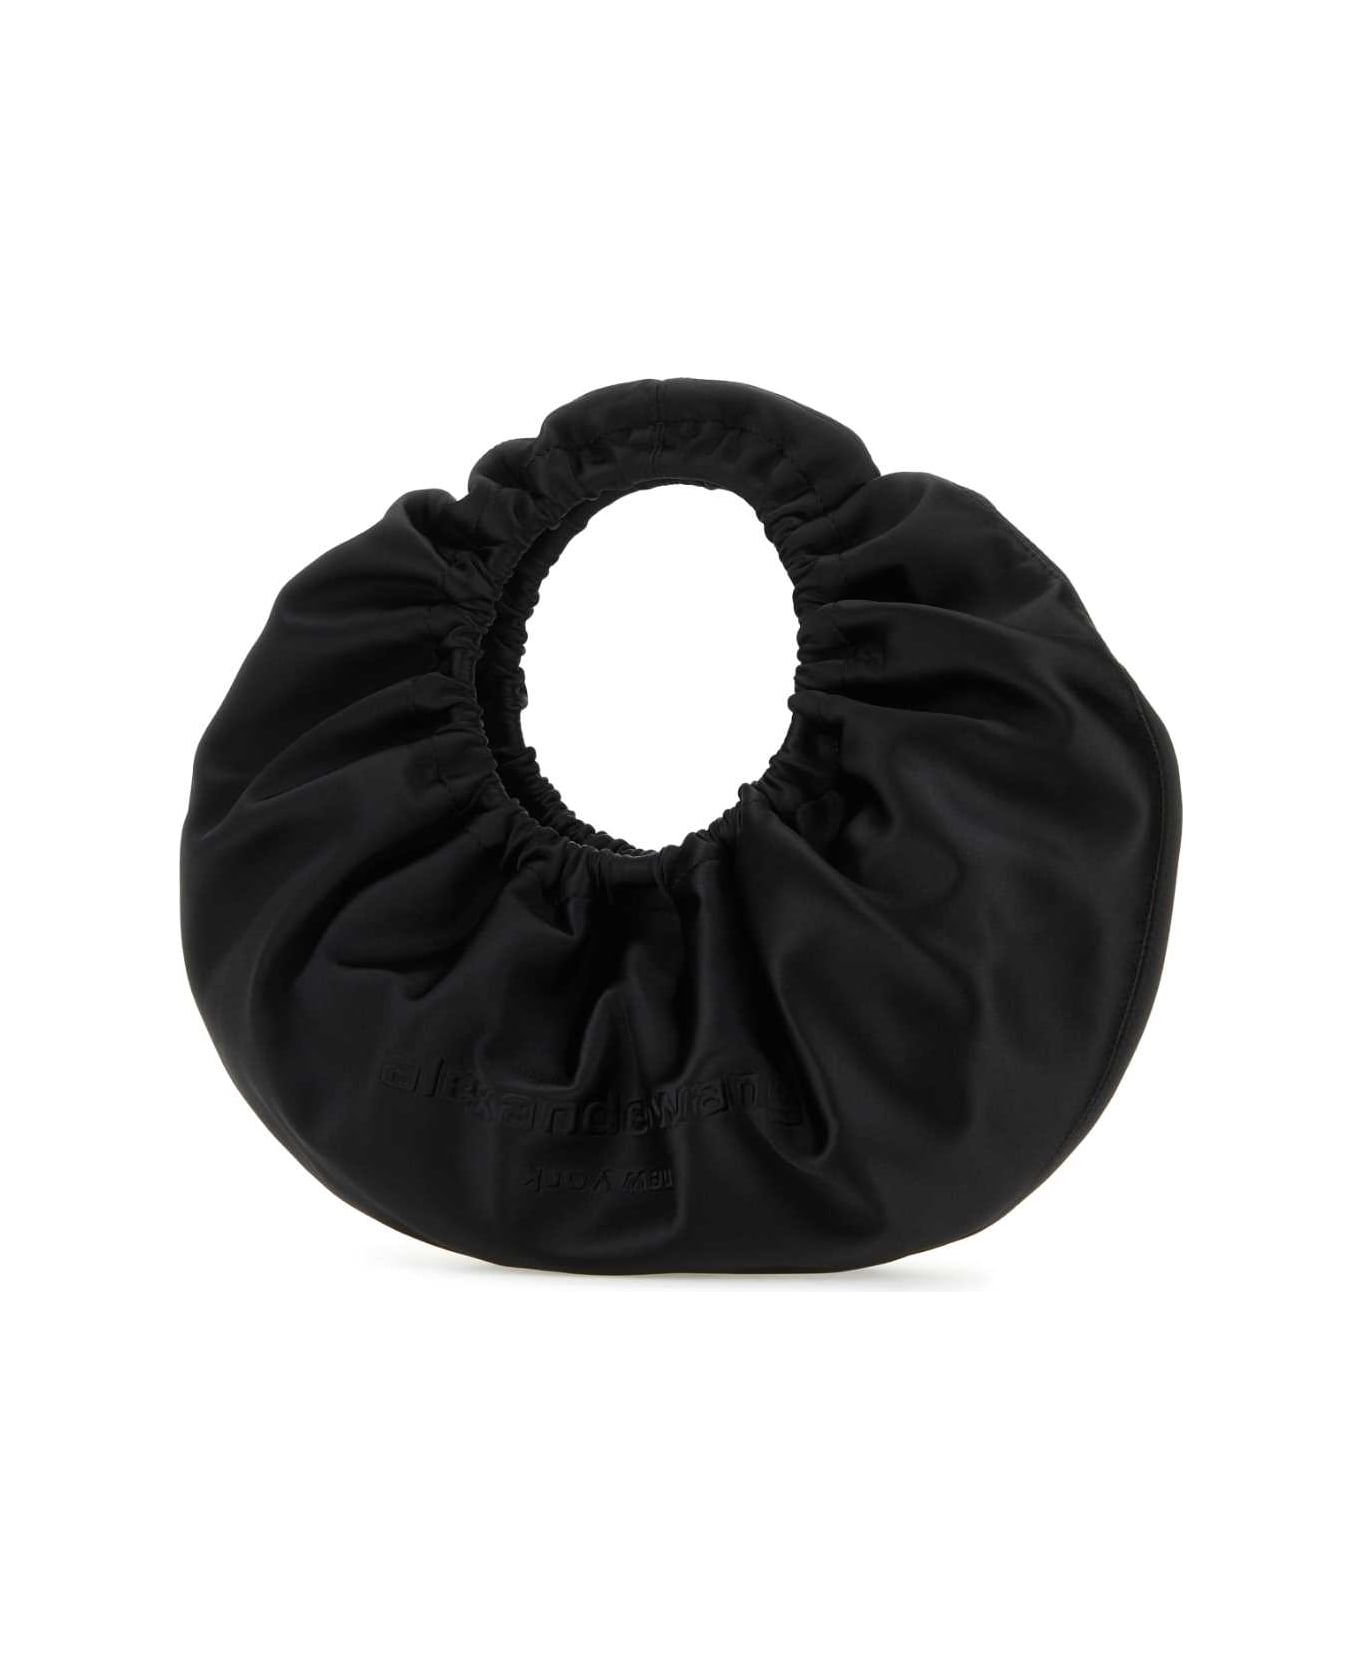 Alexander Wang Black Satin Crescent Small Handbag - BLACK